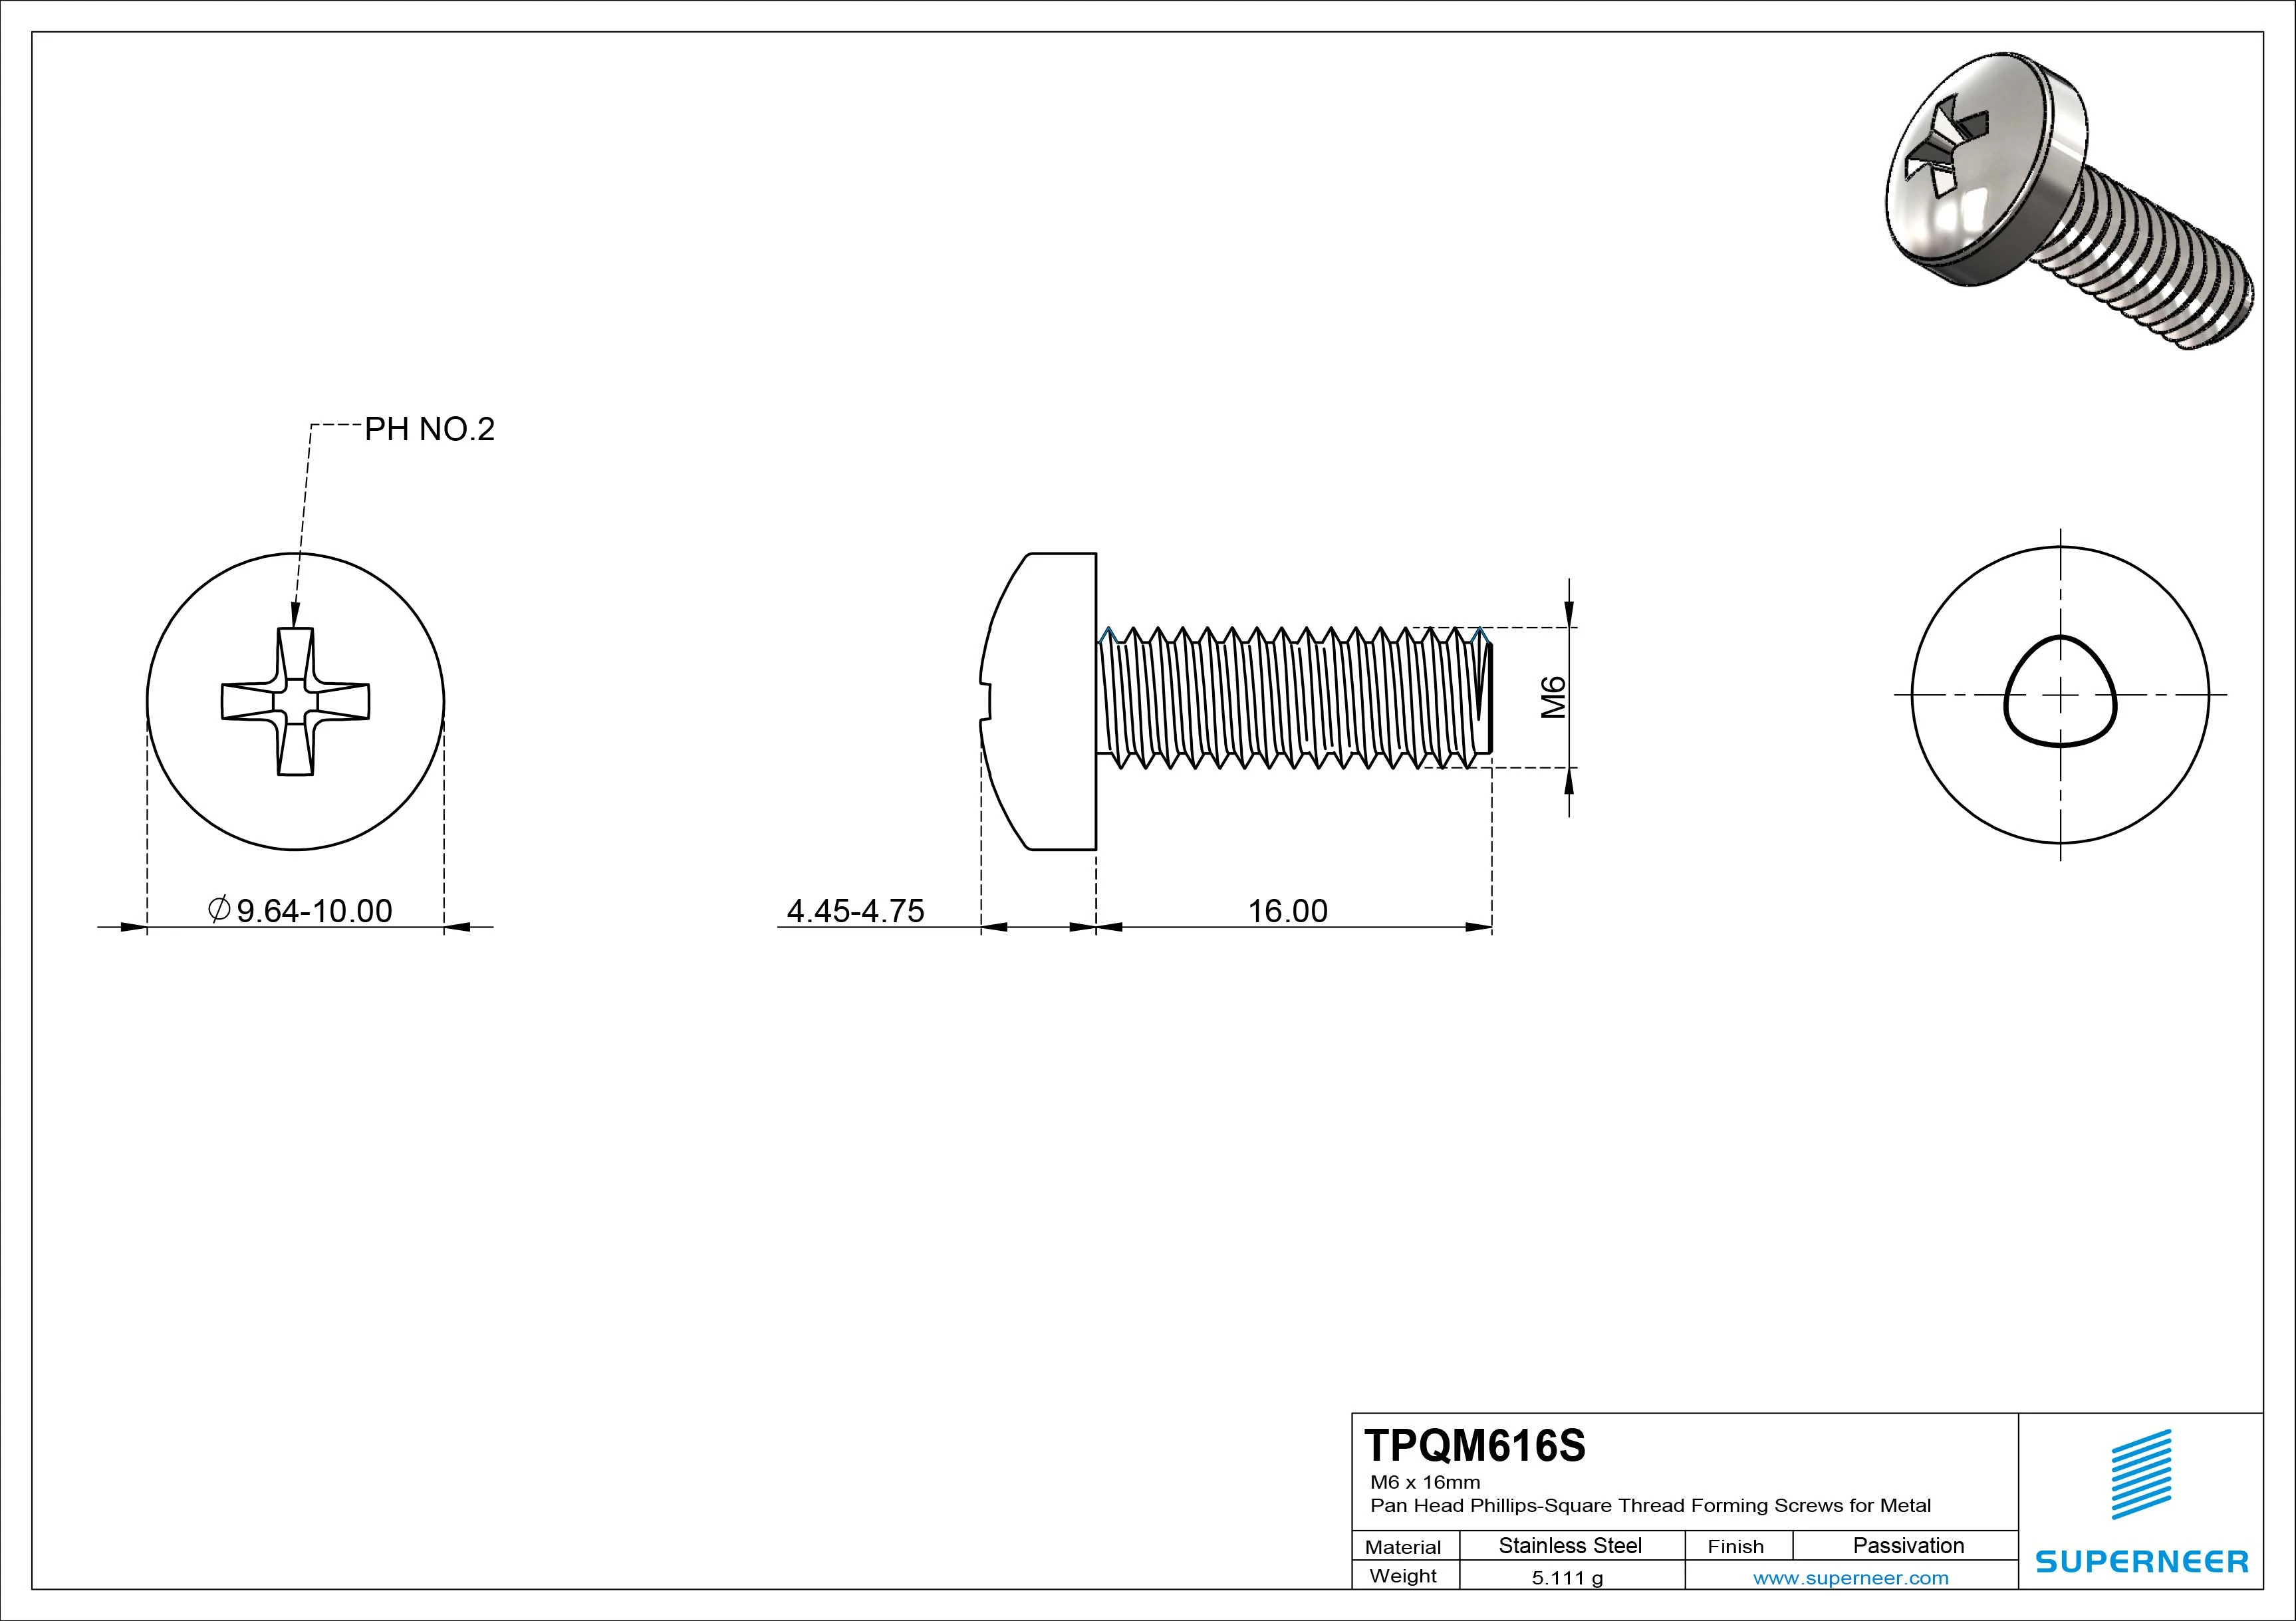 M6 × 16mm Pan Head Phillips-Square Thread Forming Screws for Metal SUS304 Stainless Steel Inox